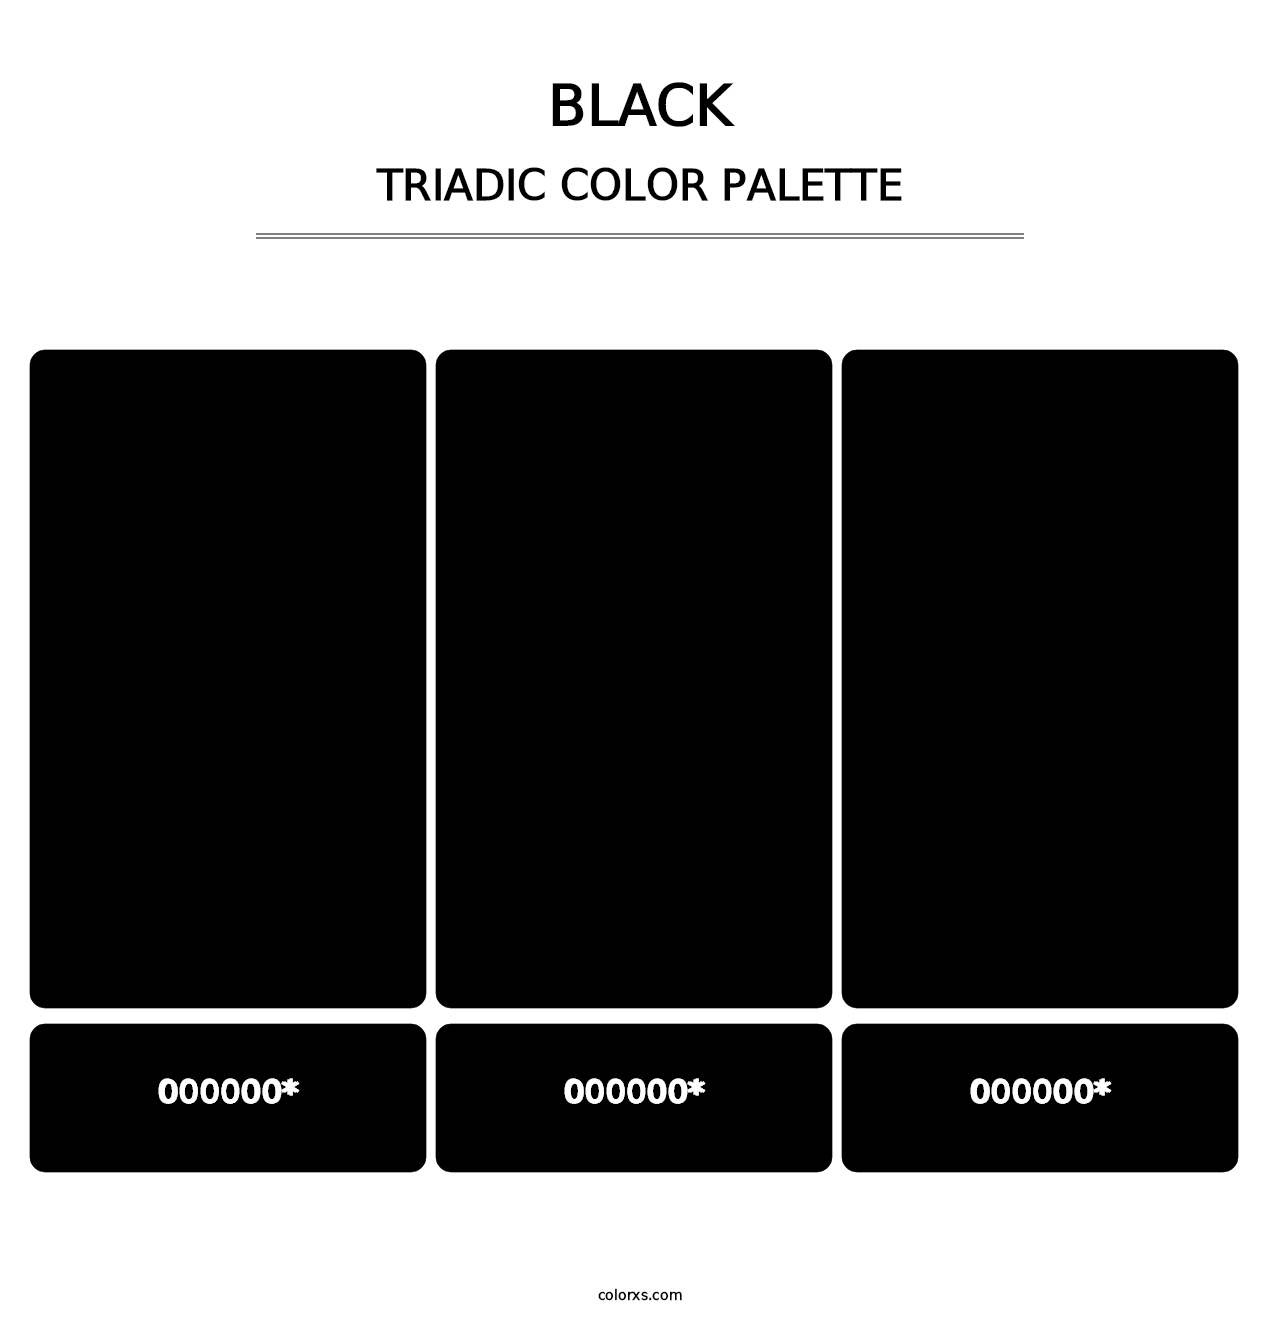 Black - Triadic Color Palette